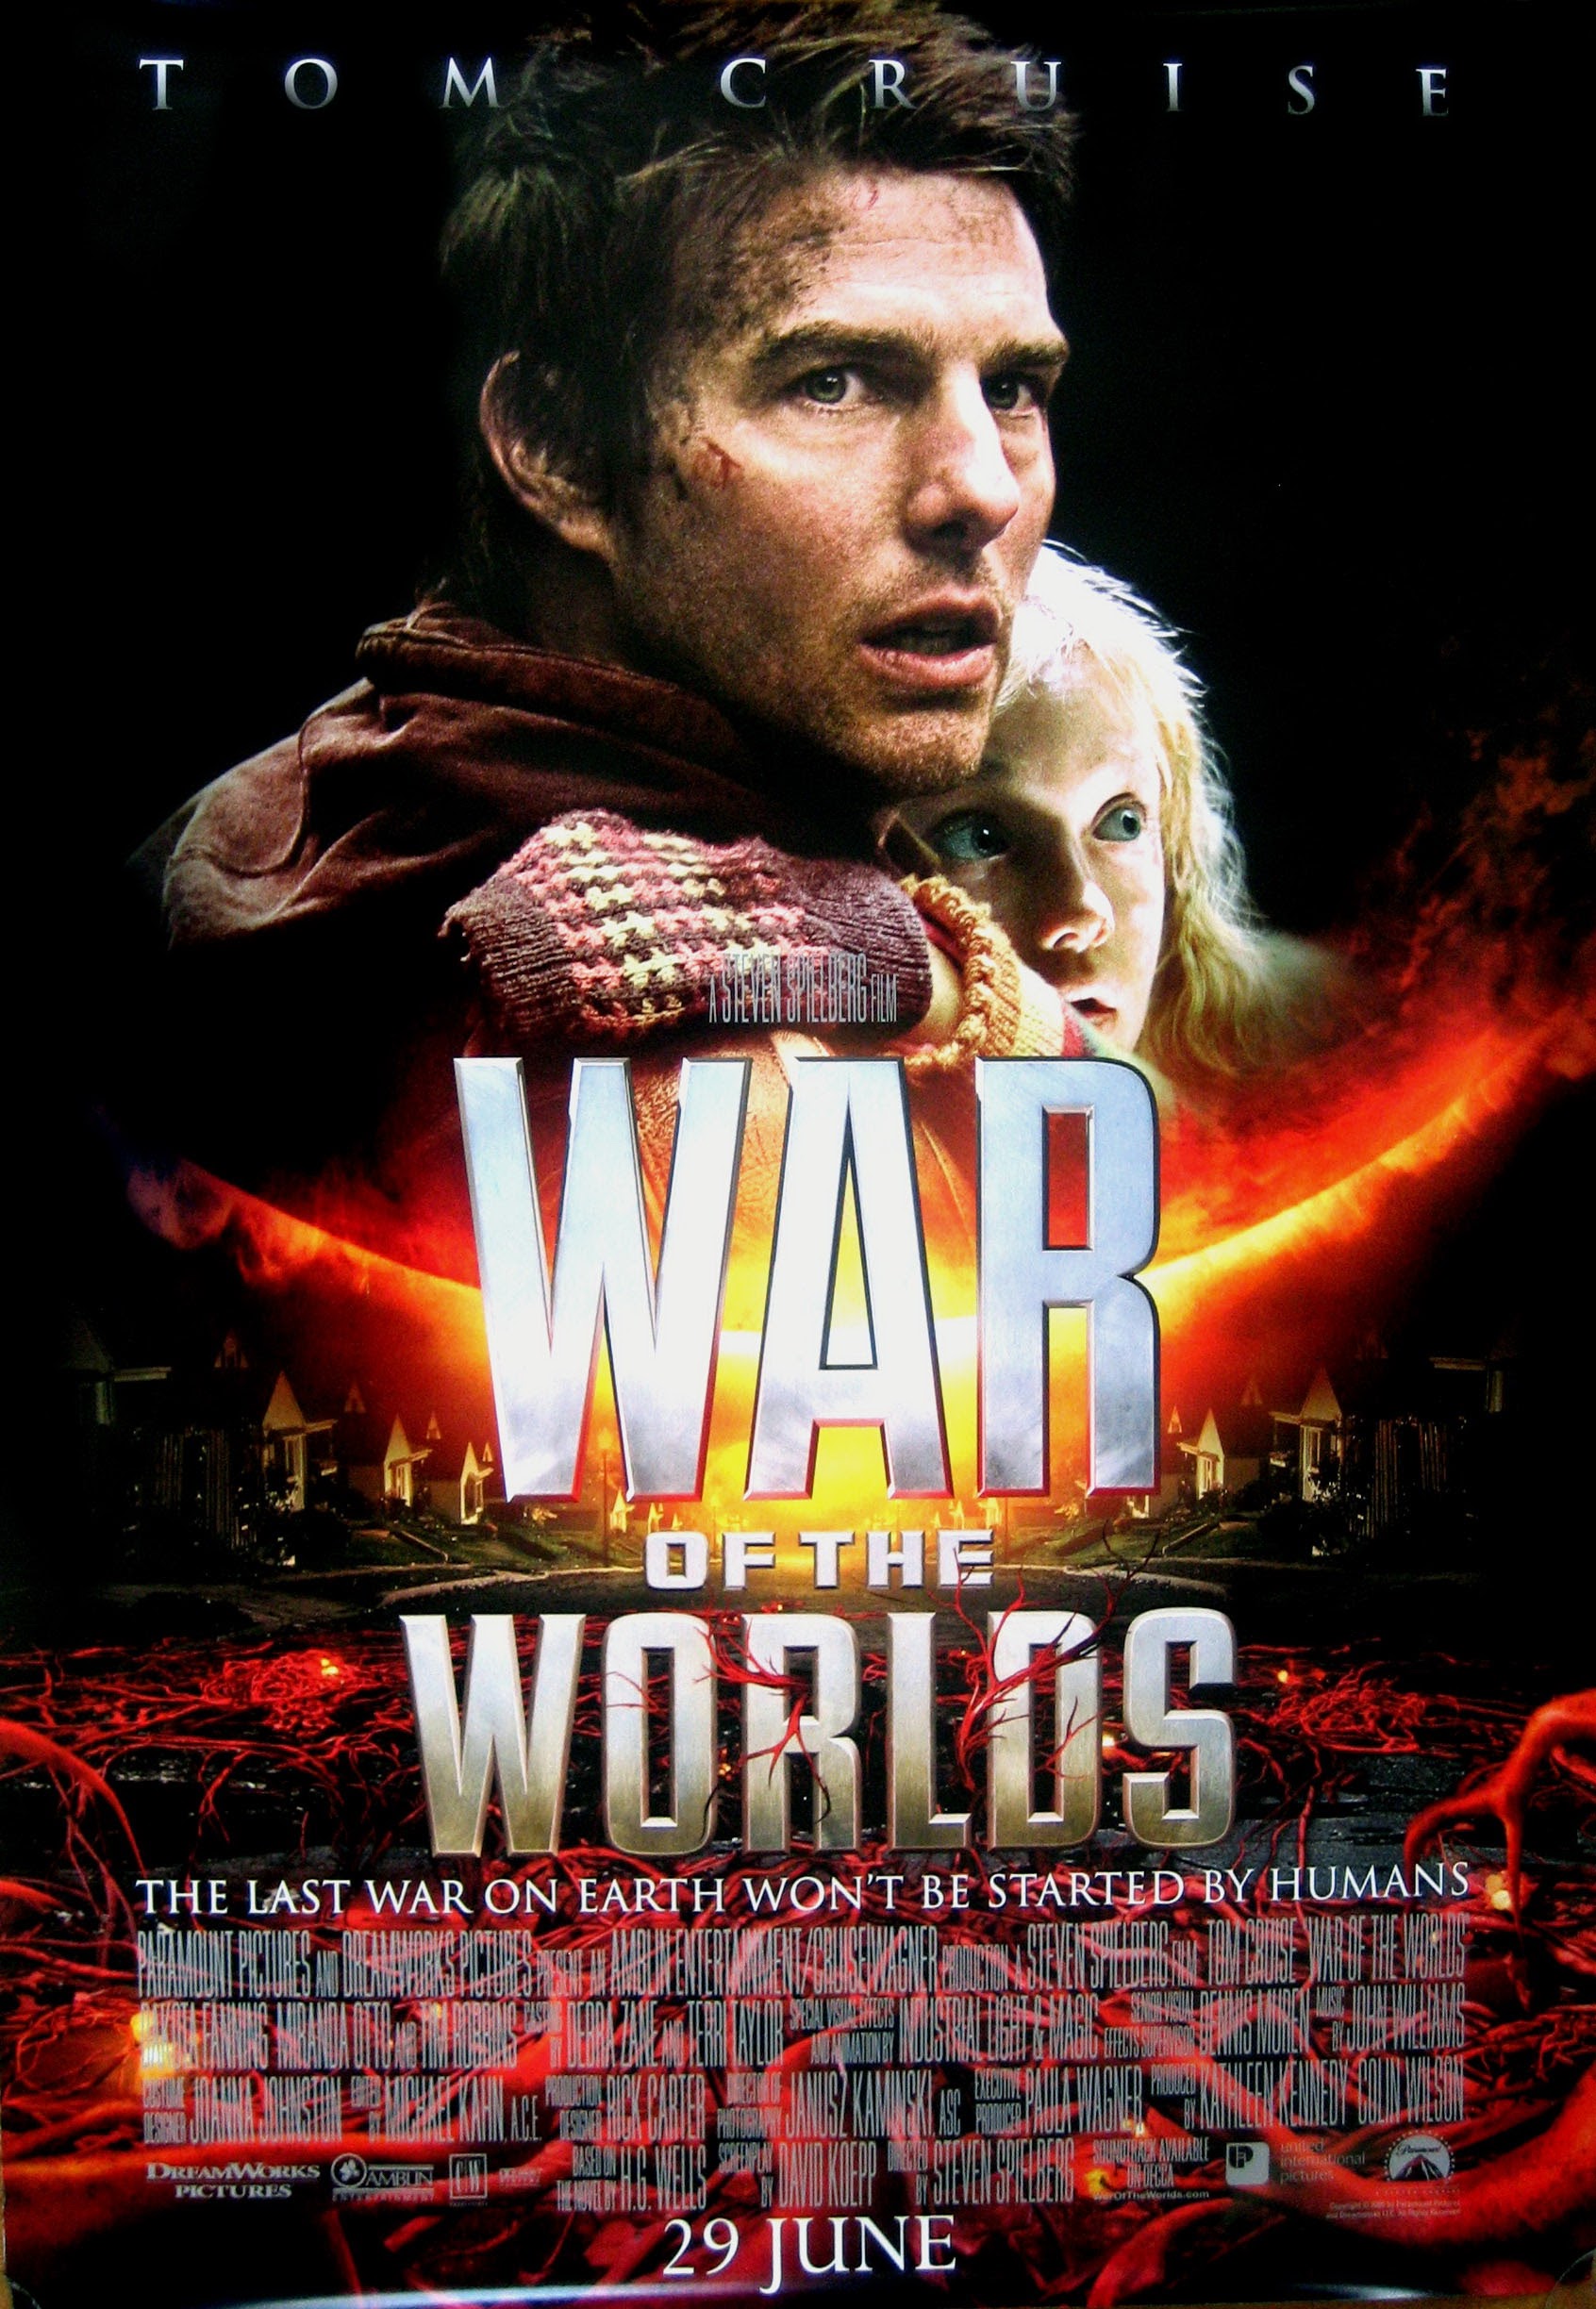 La guerra de los mundos (War of the worlds) (2005) – C@rtelesmix